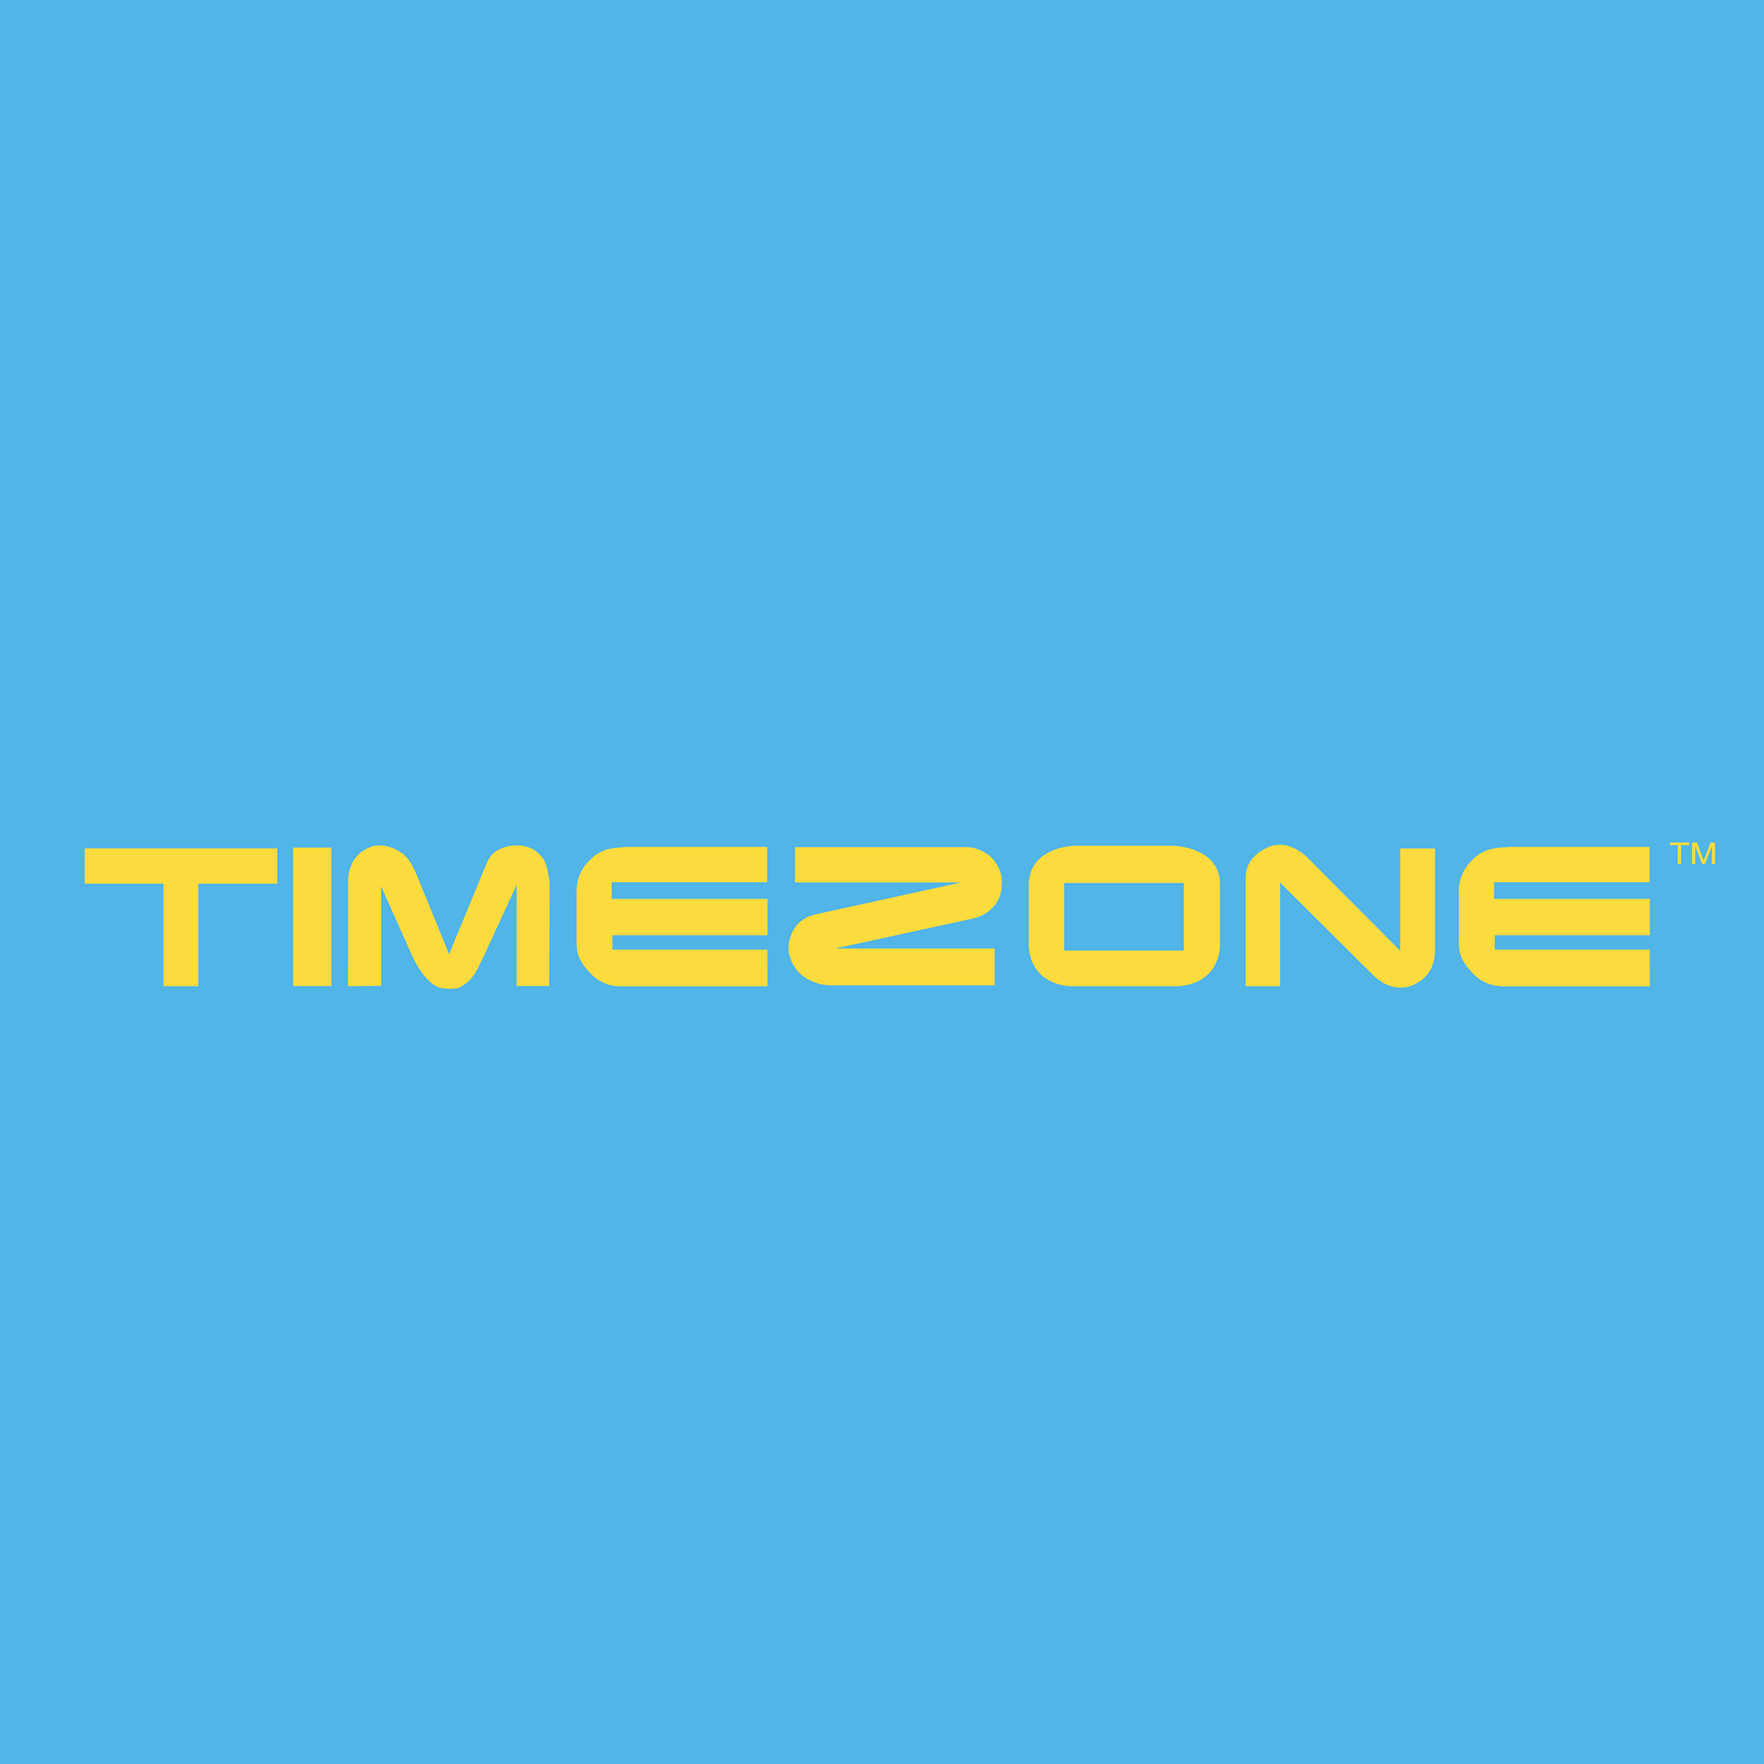 Timezone (City Square Mall) - Dine, Shop, Earn